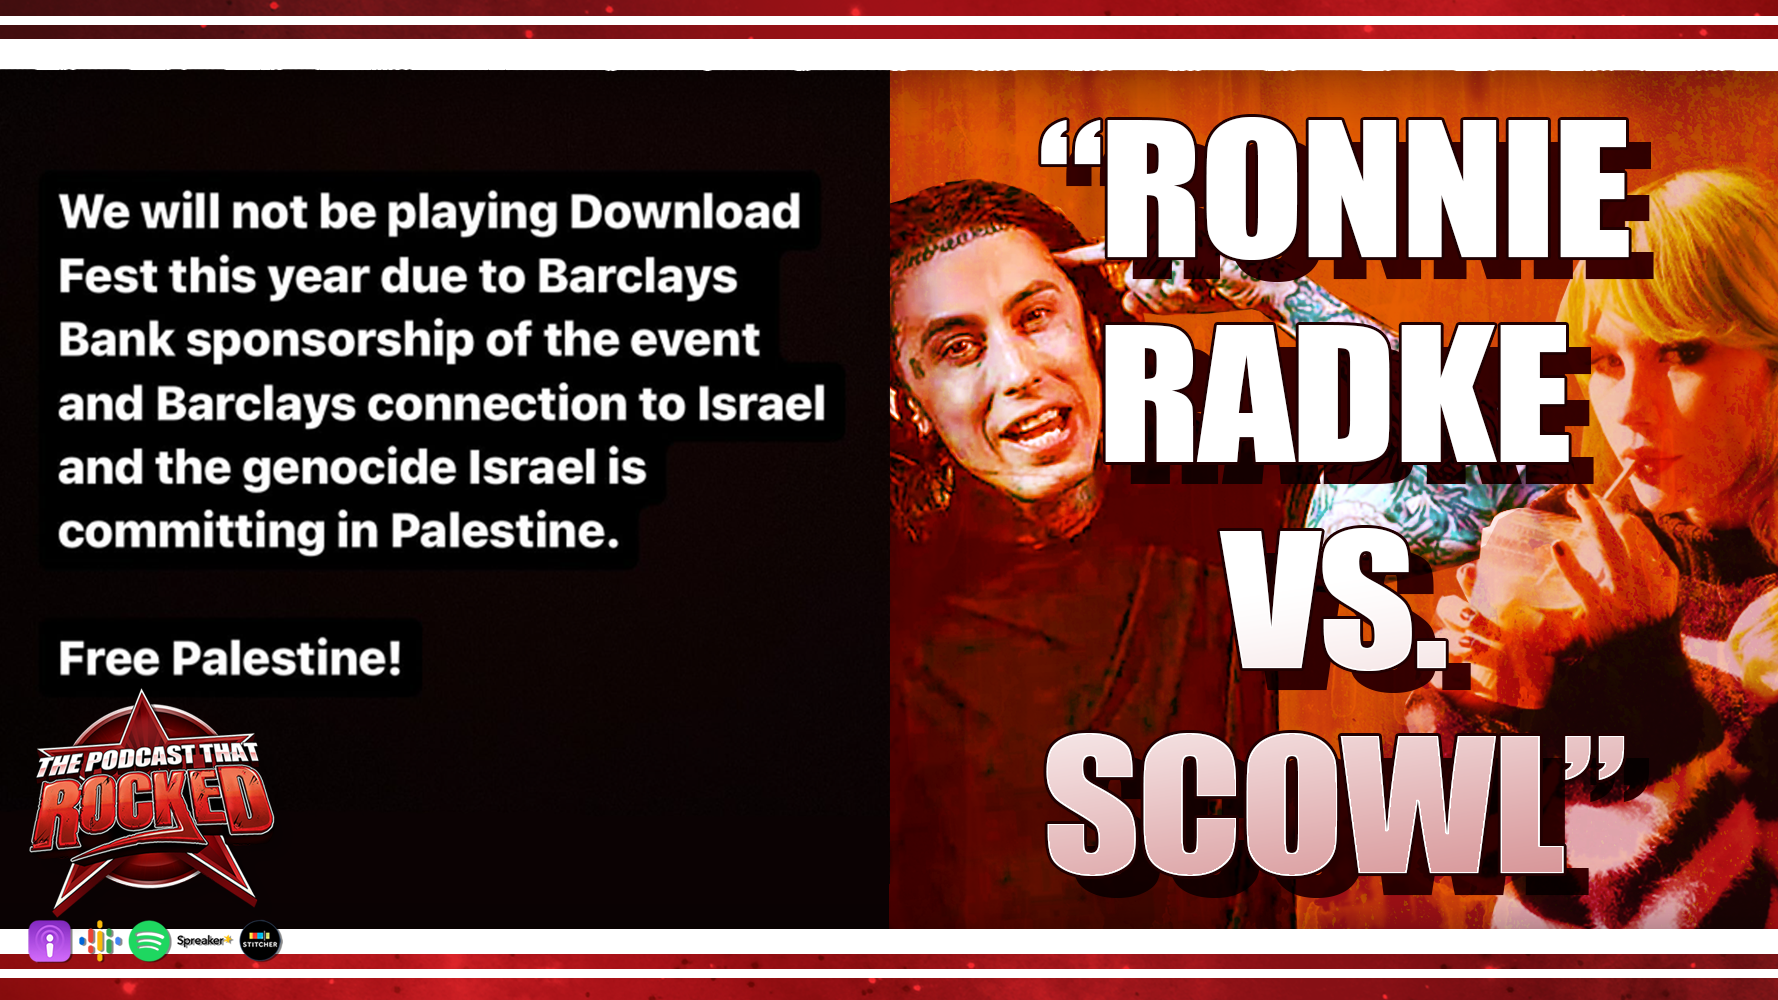 Ronnie Radke VS Scowl | The Podcast That Rocked